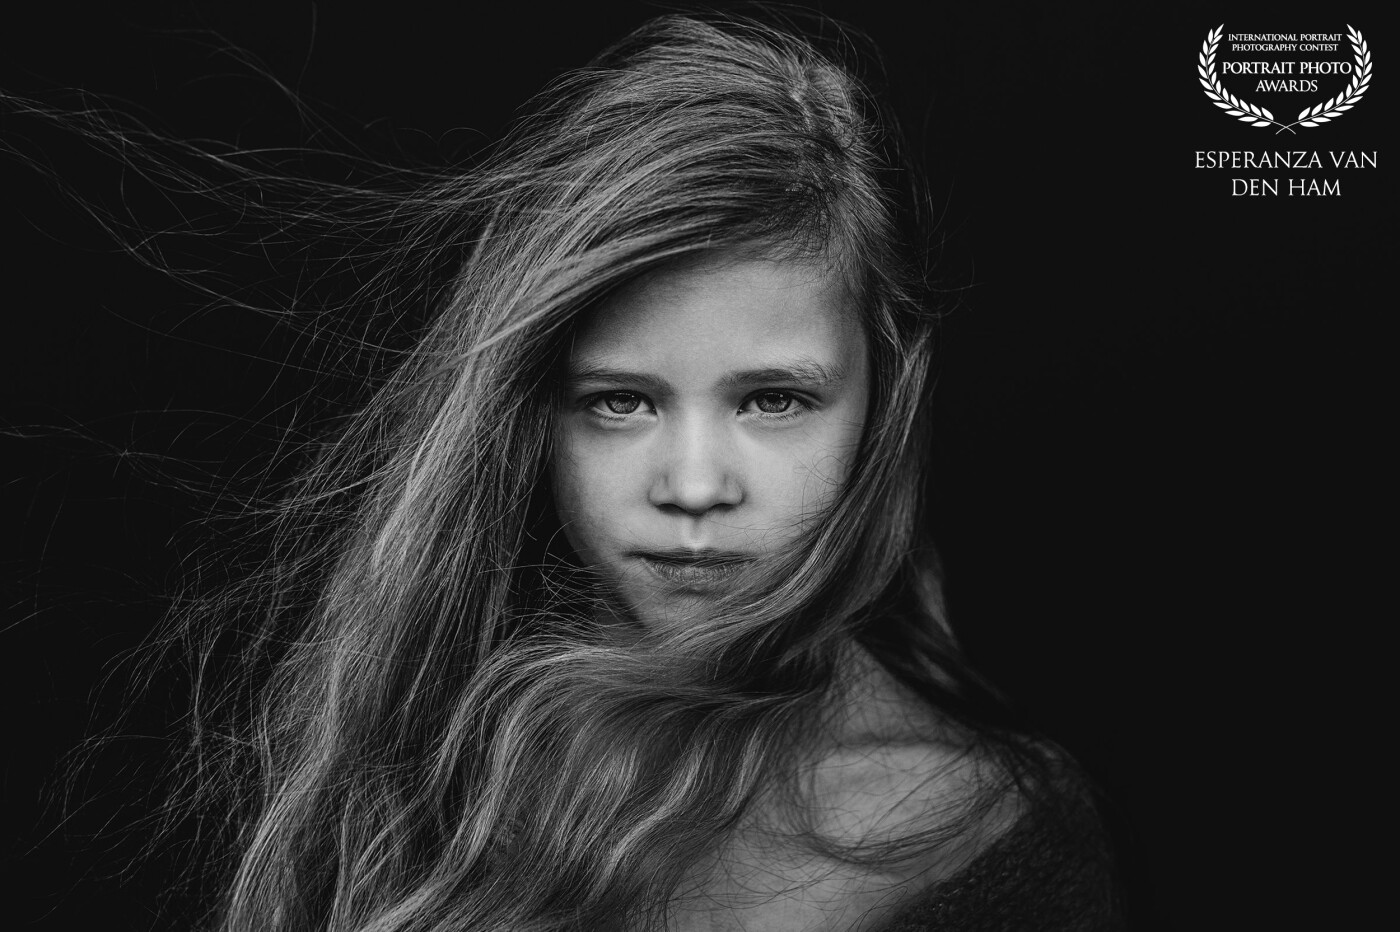 Model: Roos<br />
Created by: @iamshootingportraits<br />
www.iamshootingportraits.nl